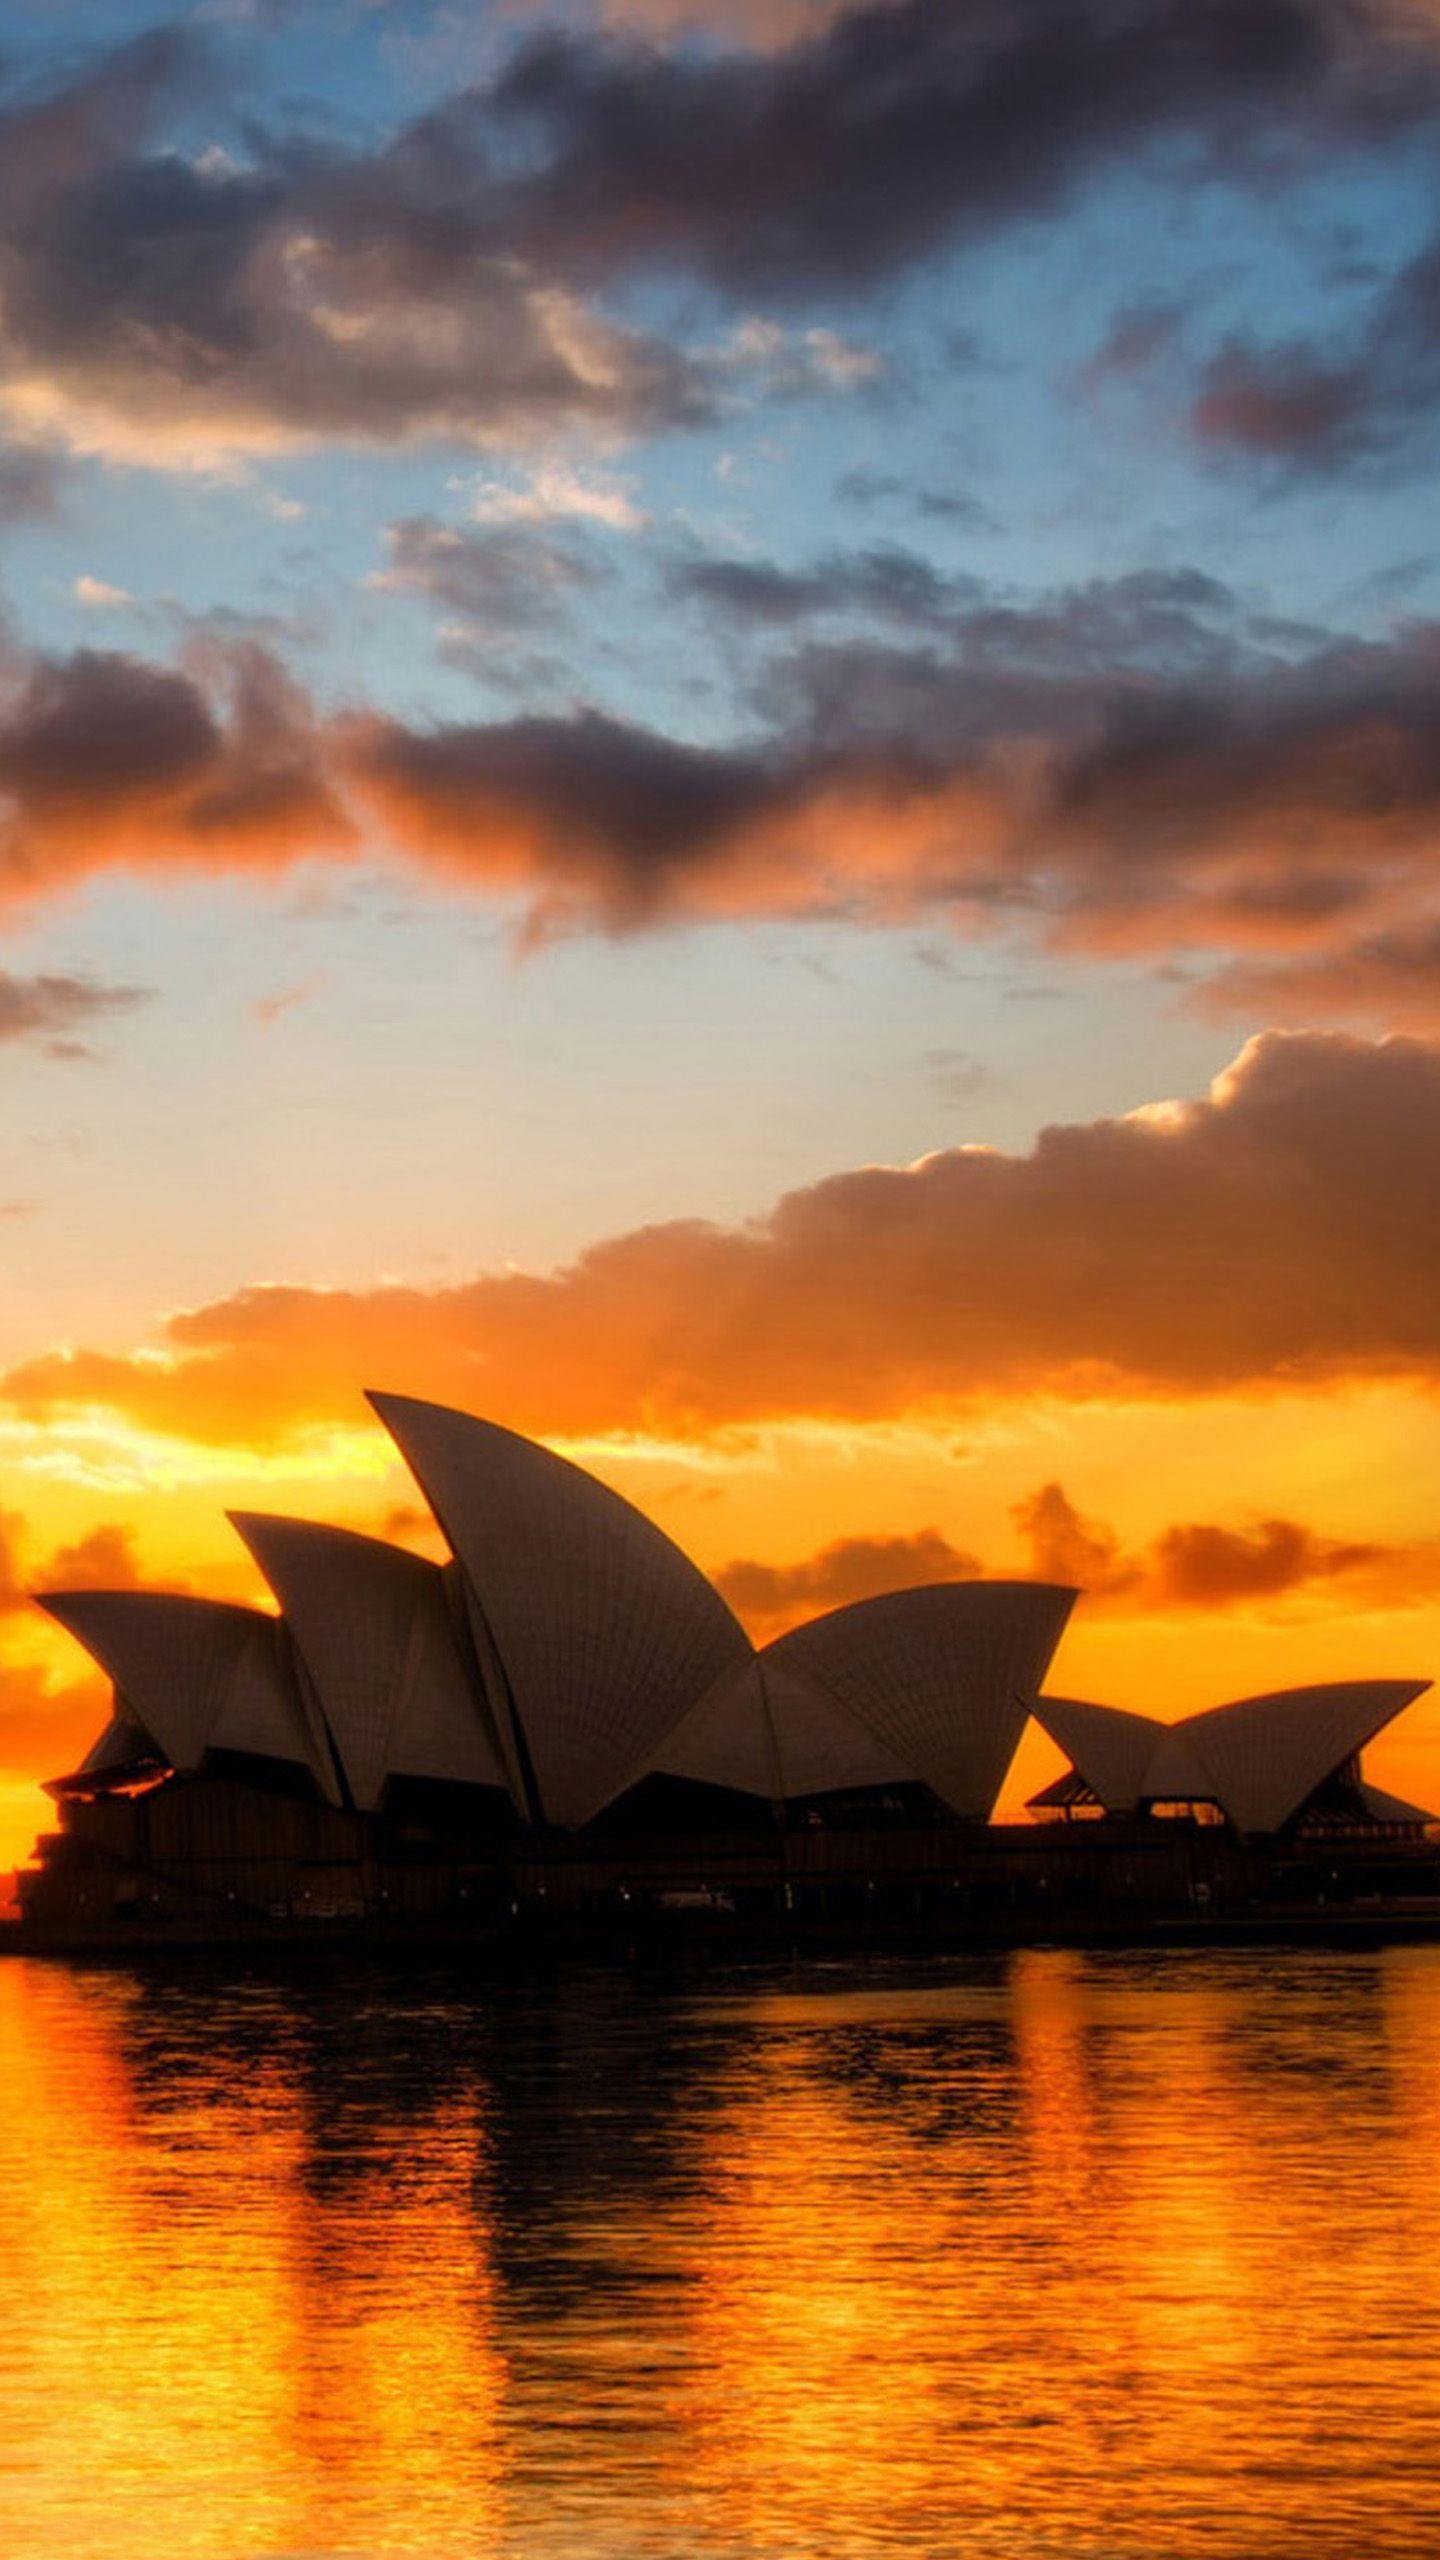 Australia Sydney City sunset Galaxy S6 Wallpaper. Galaxy S6